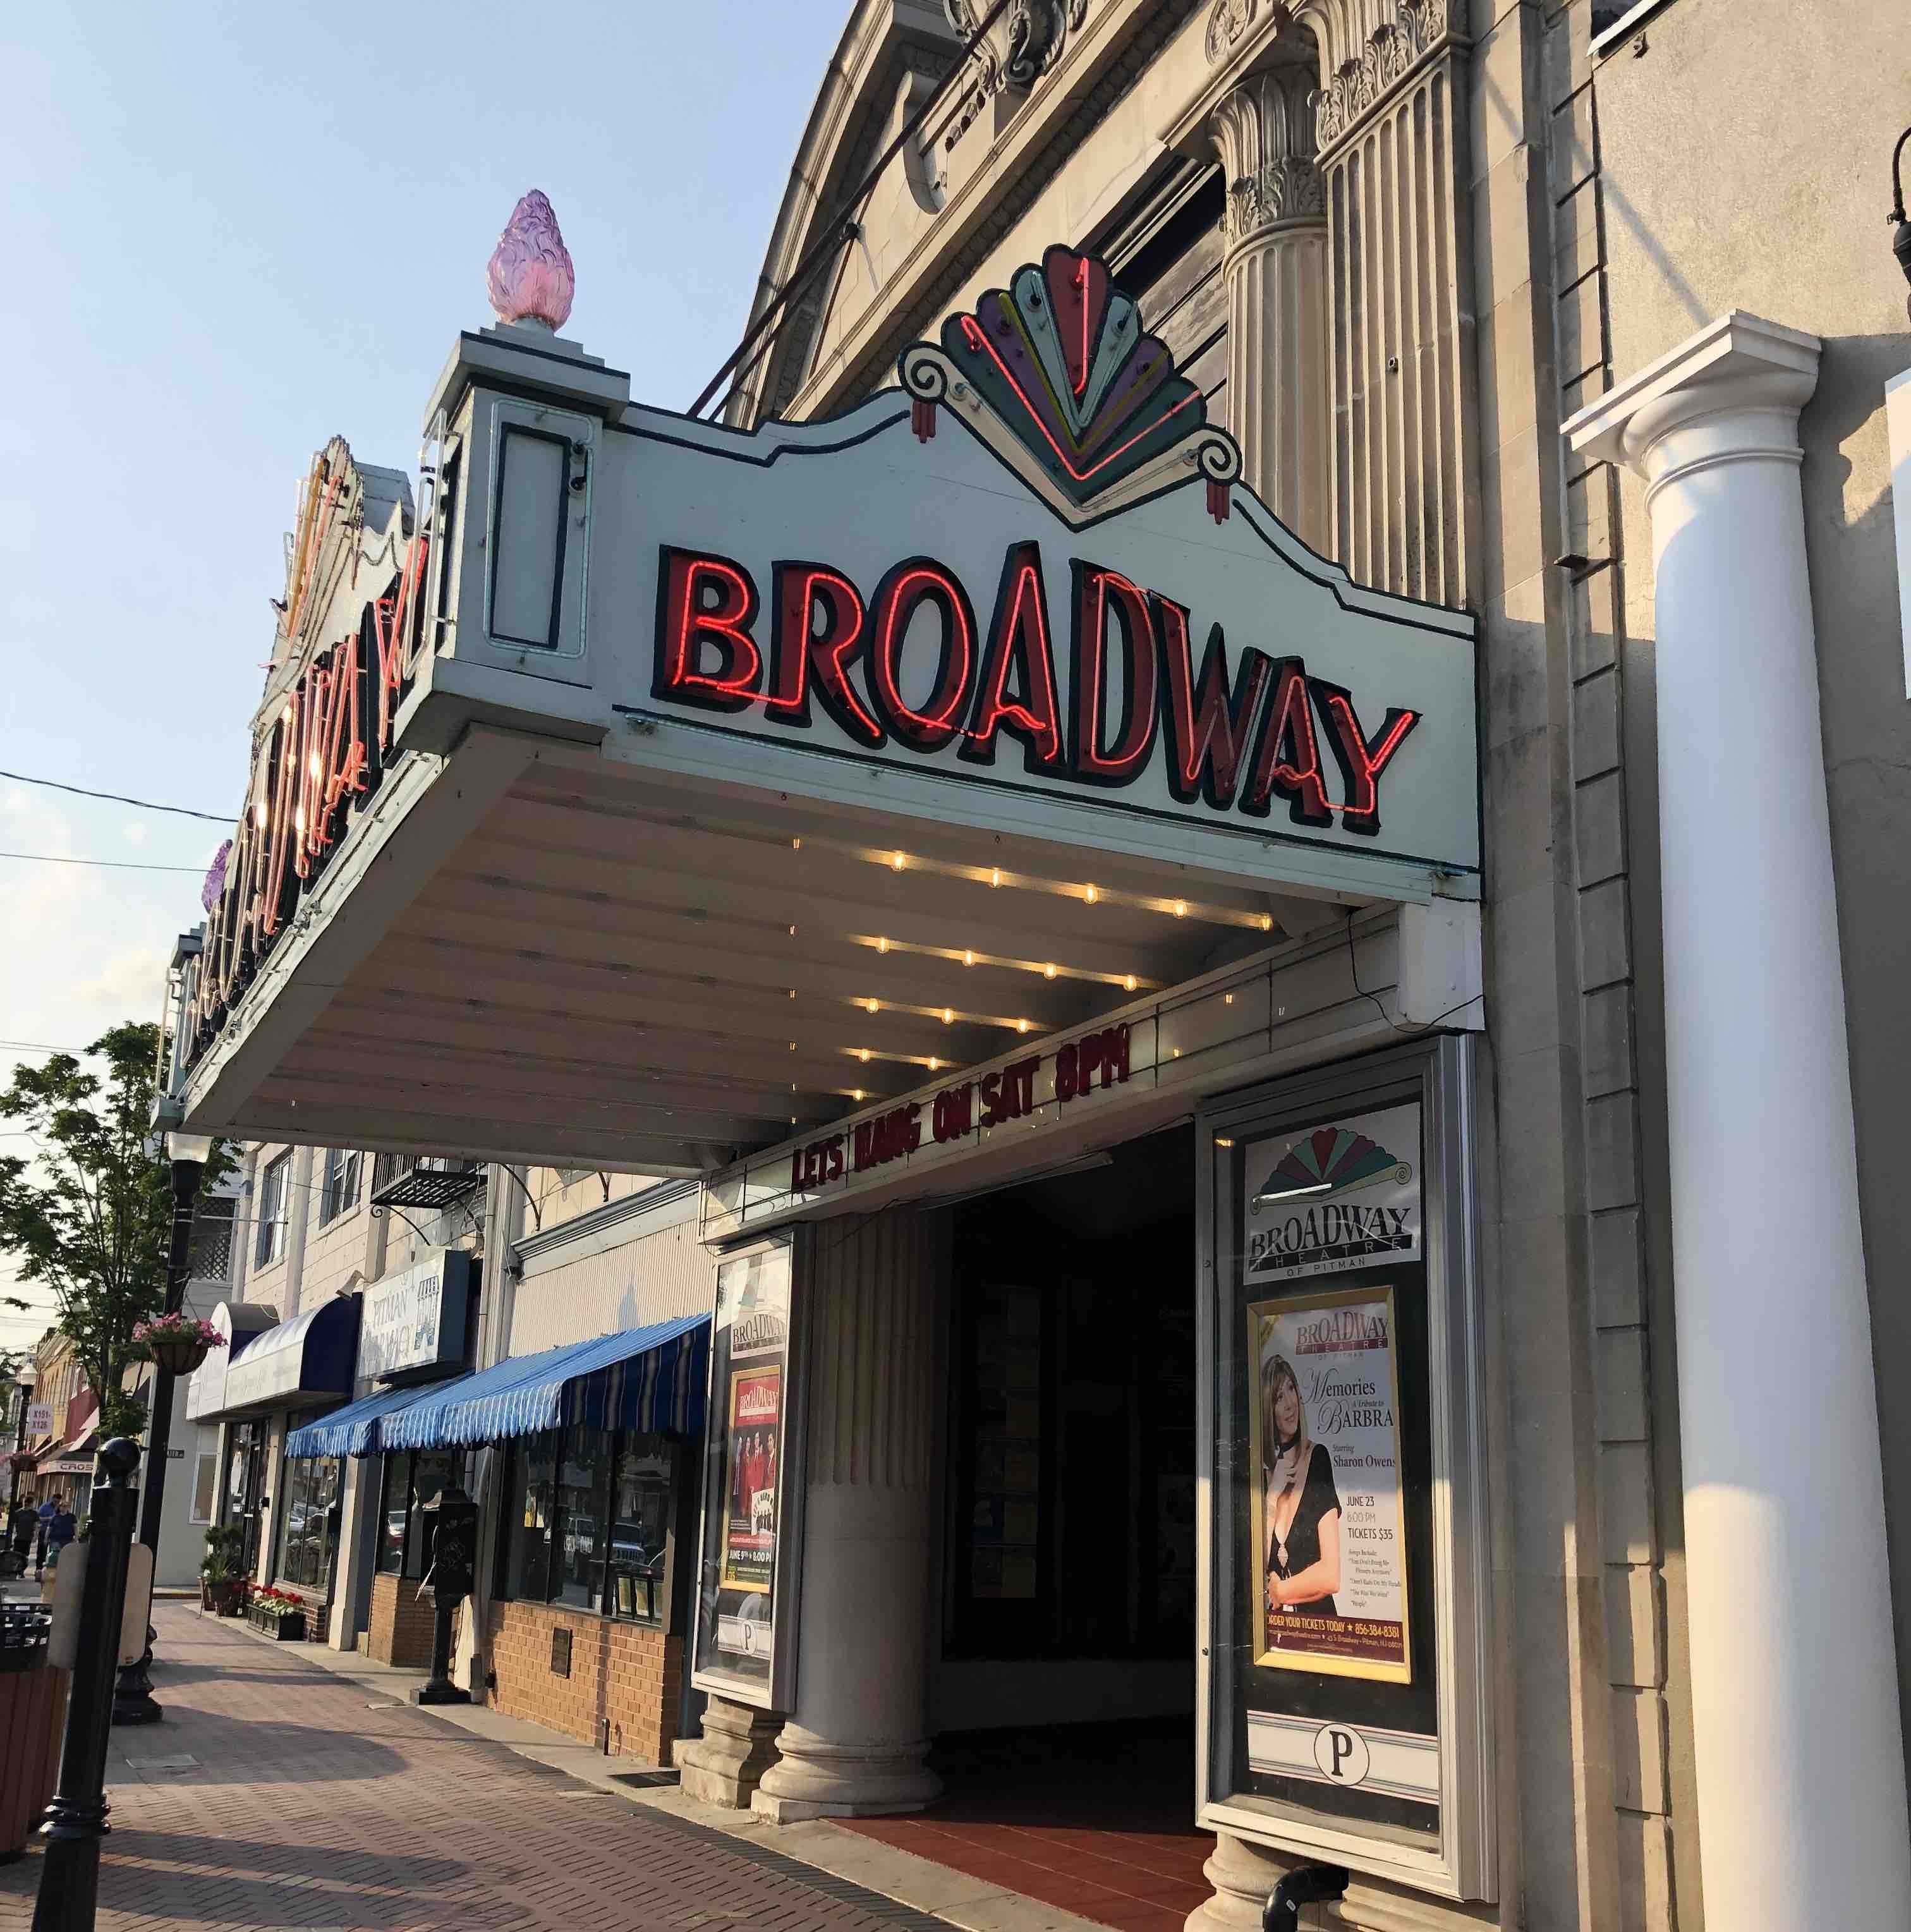 Iconic Broadway theatre of small town Pitman, NJ
June 2018